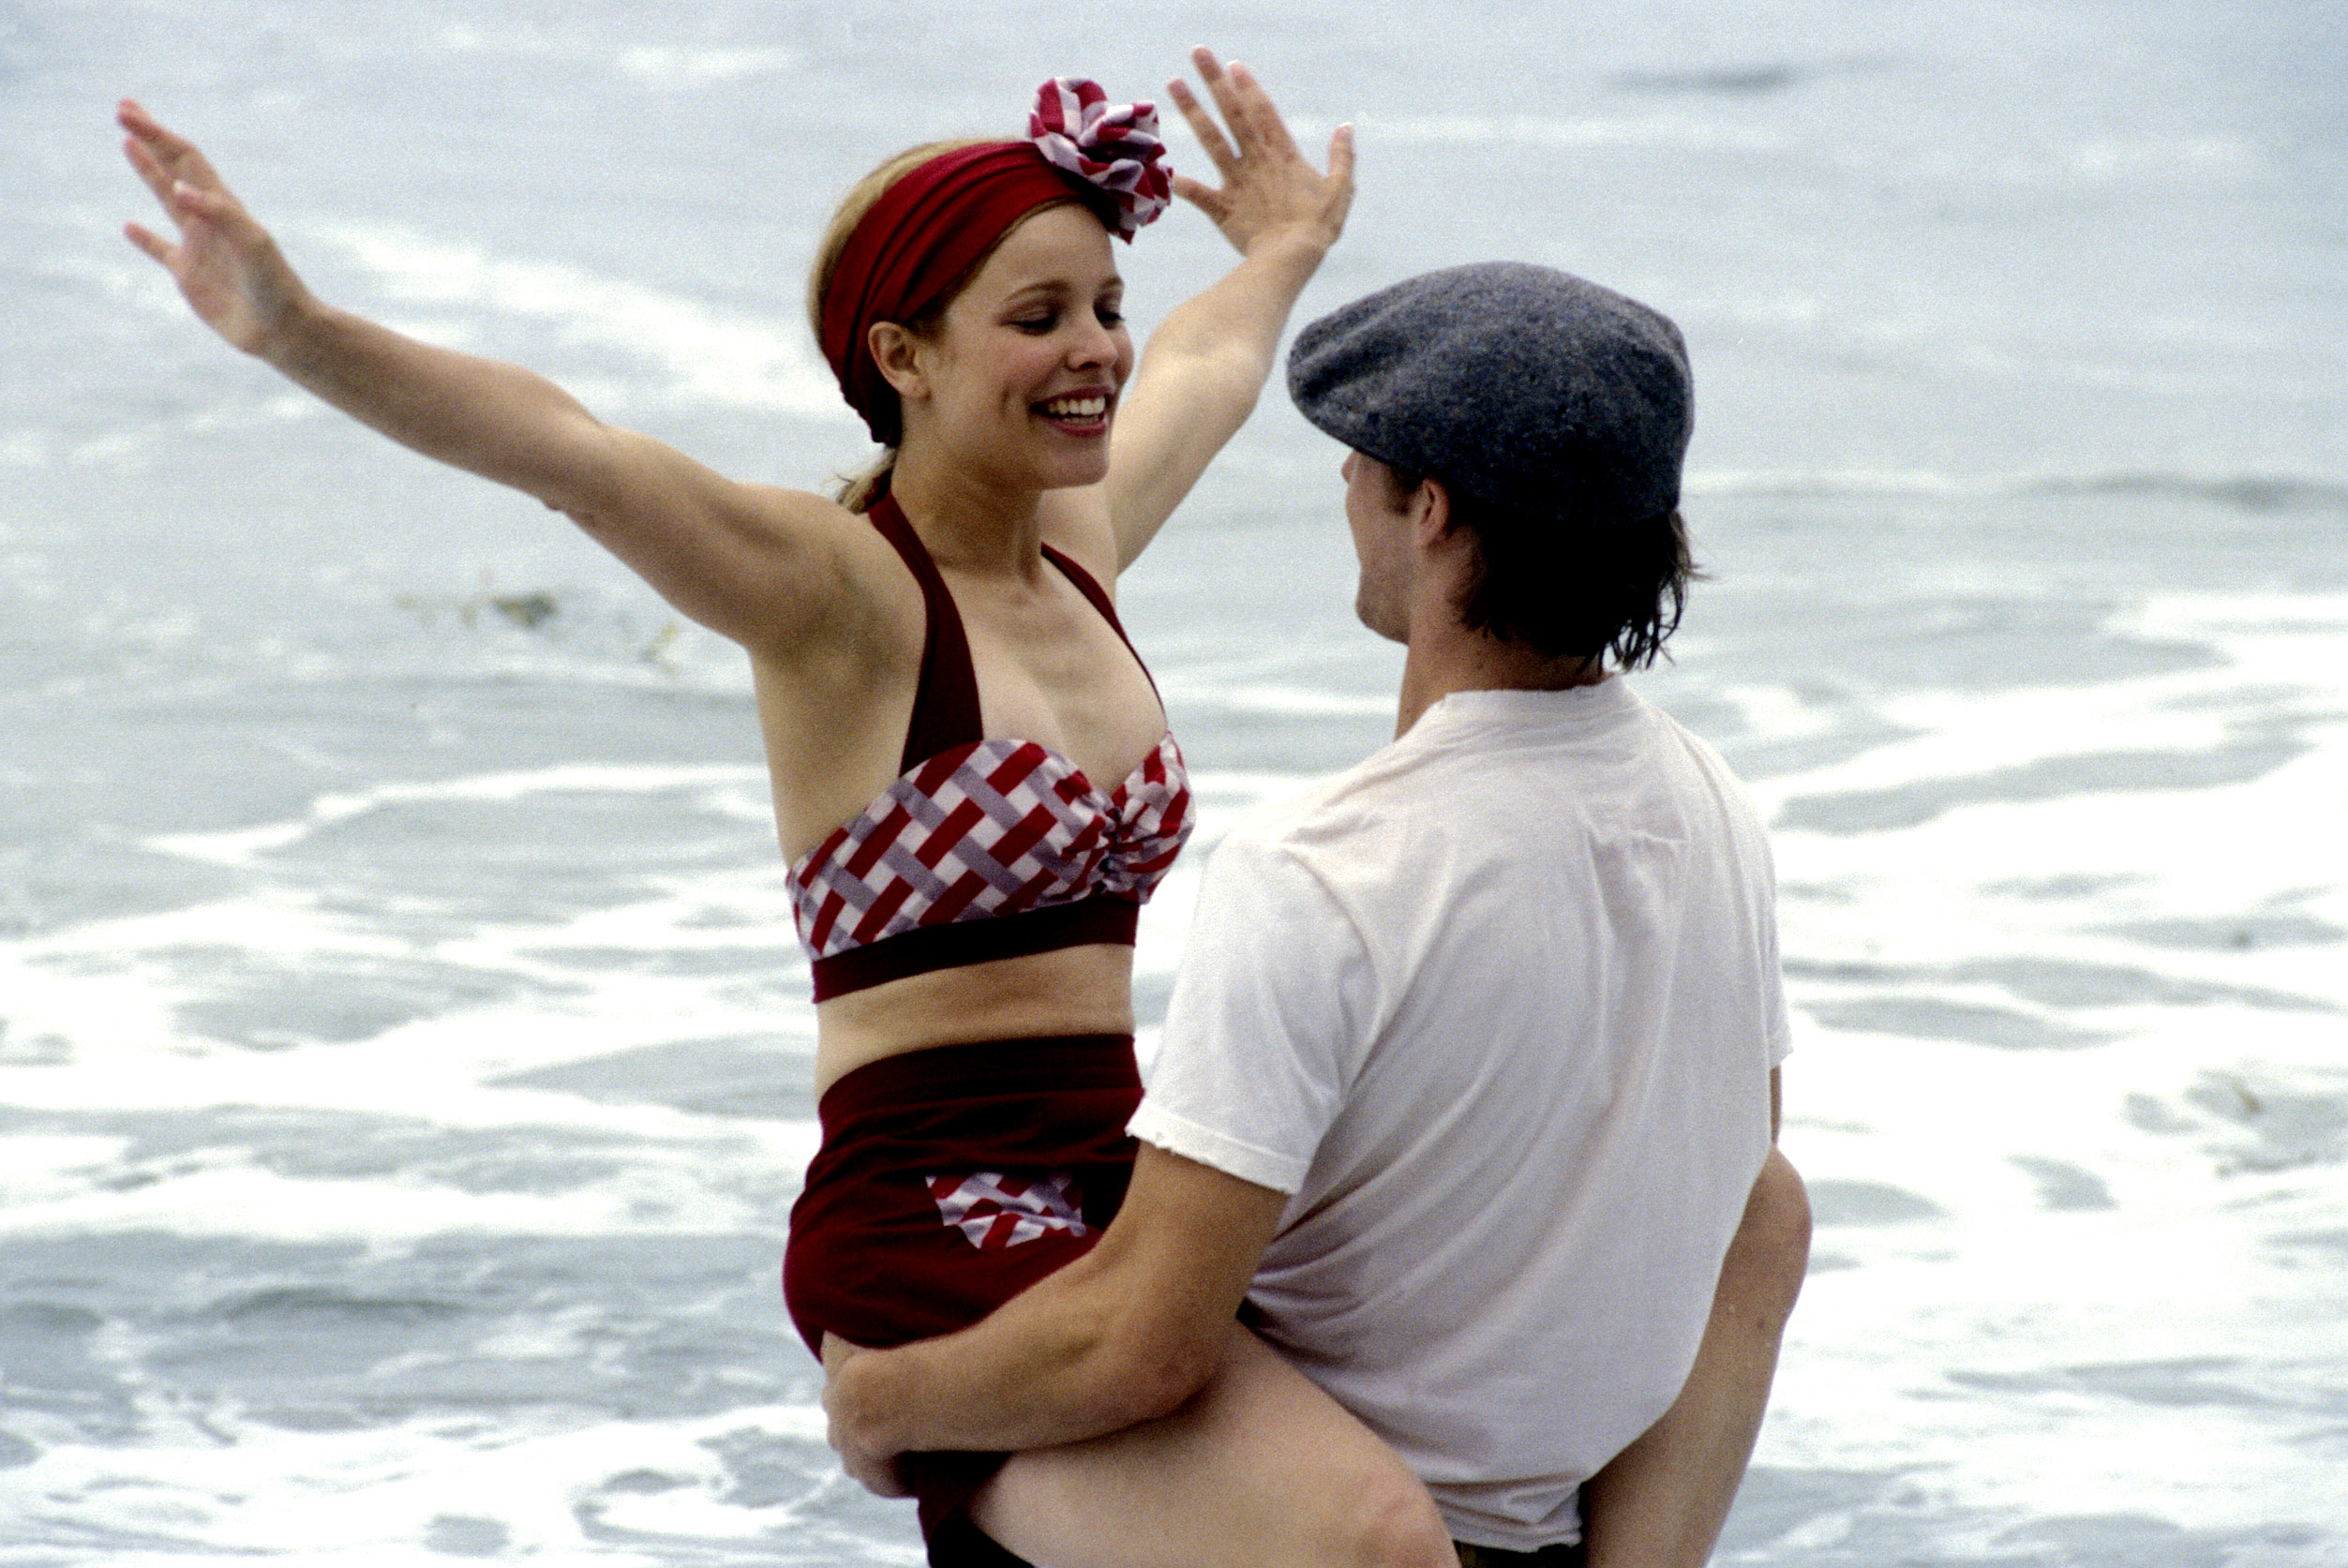 Rachel McAdams and Ryan Gosling by the ocean in The Notebook